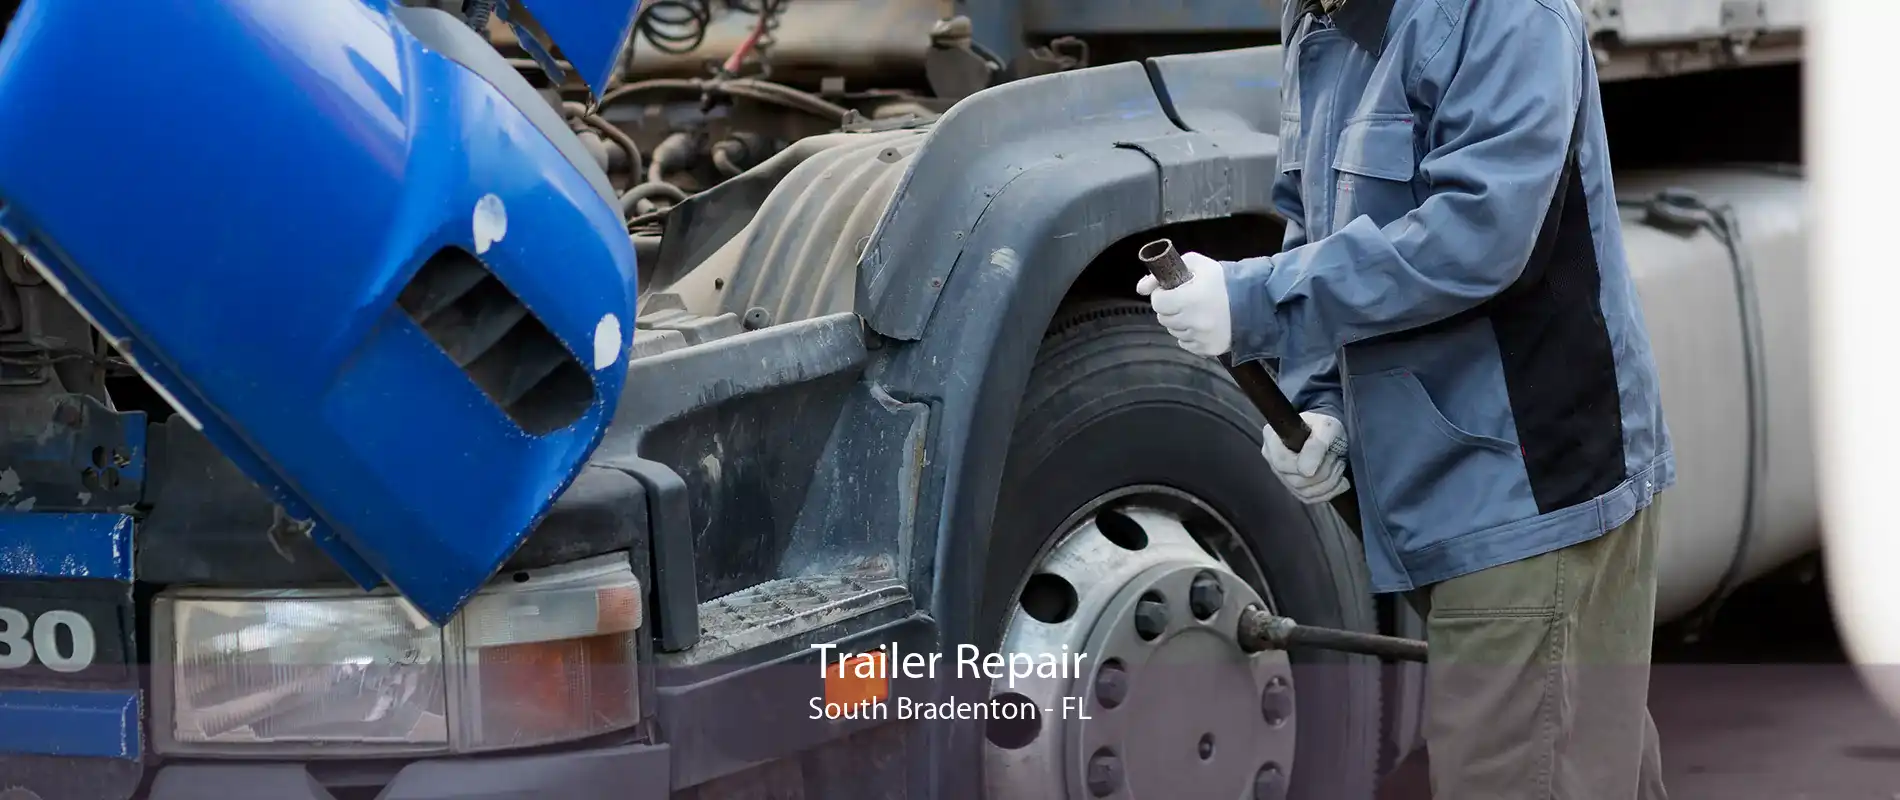 Trailer Repair South Bradenton - FL